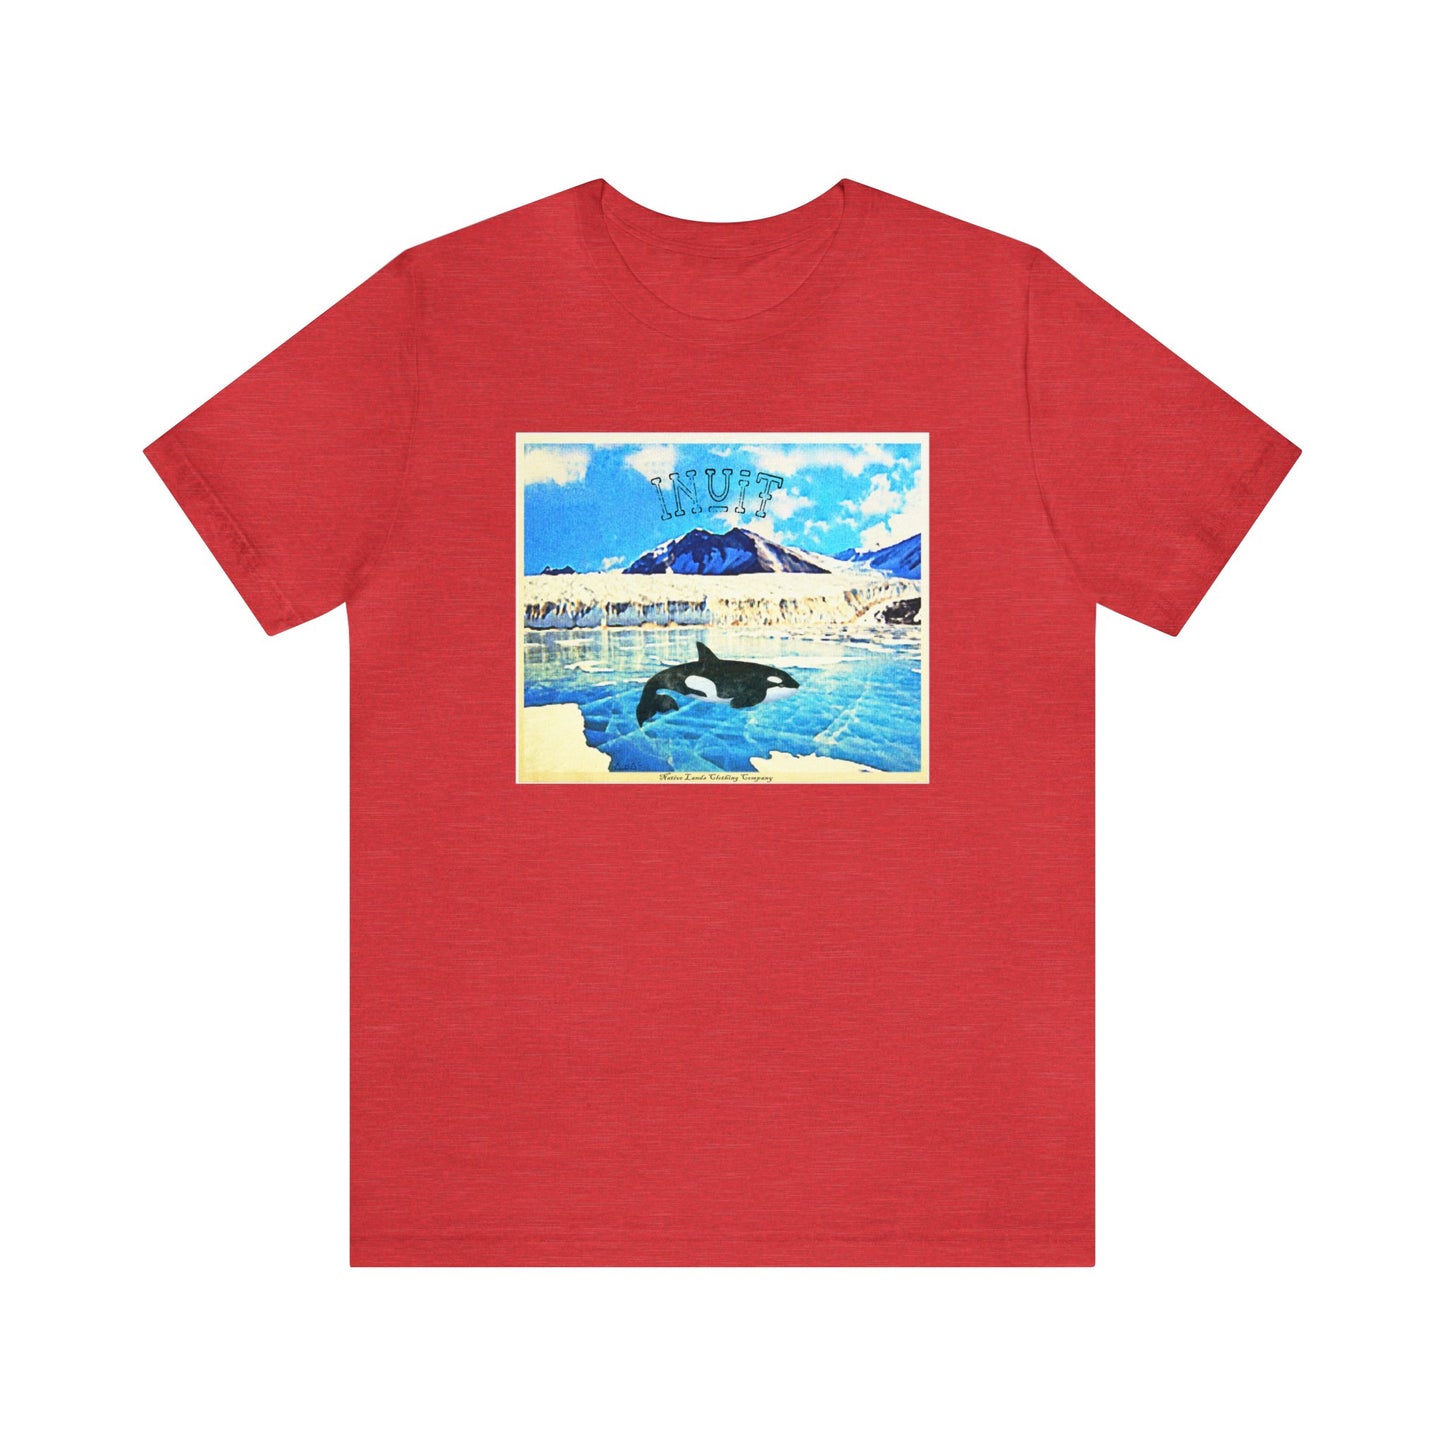 Inuit-Stamm-Shirt, Orca-Baumwolle, Indianer